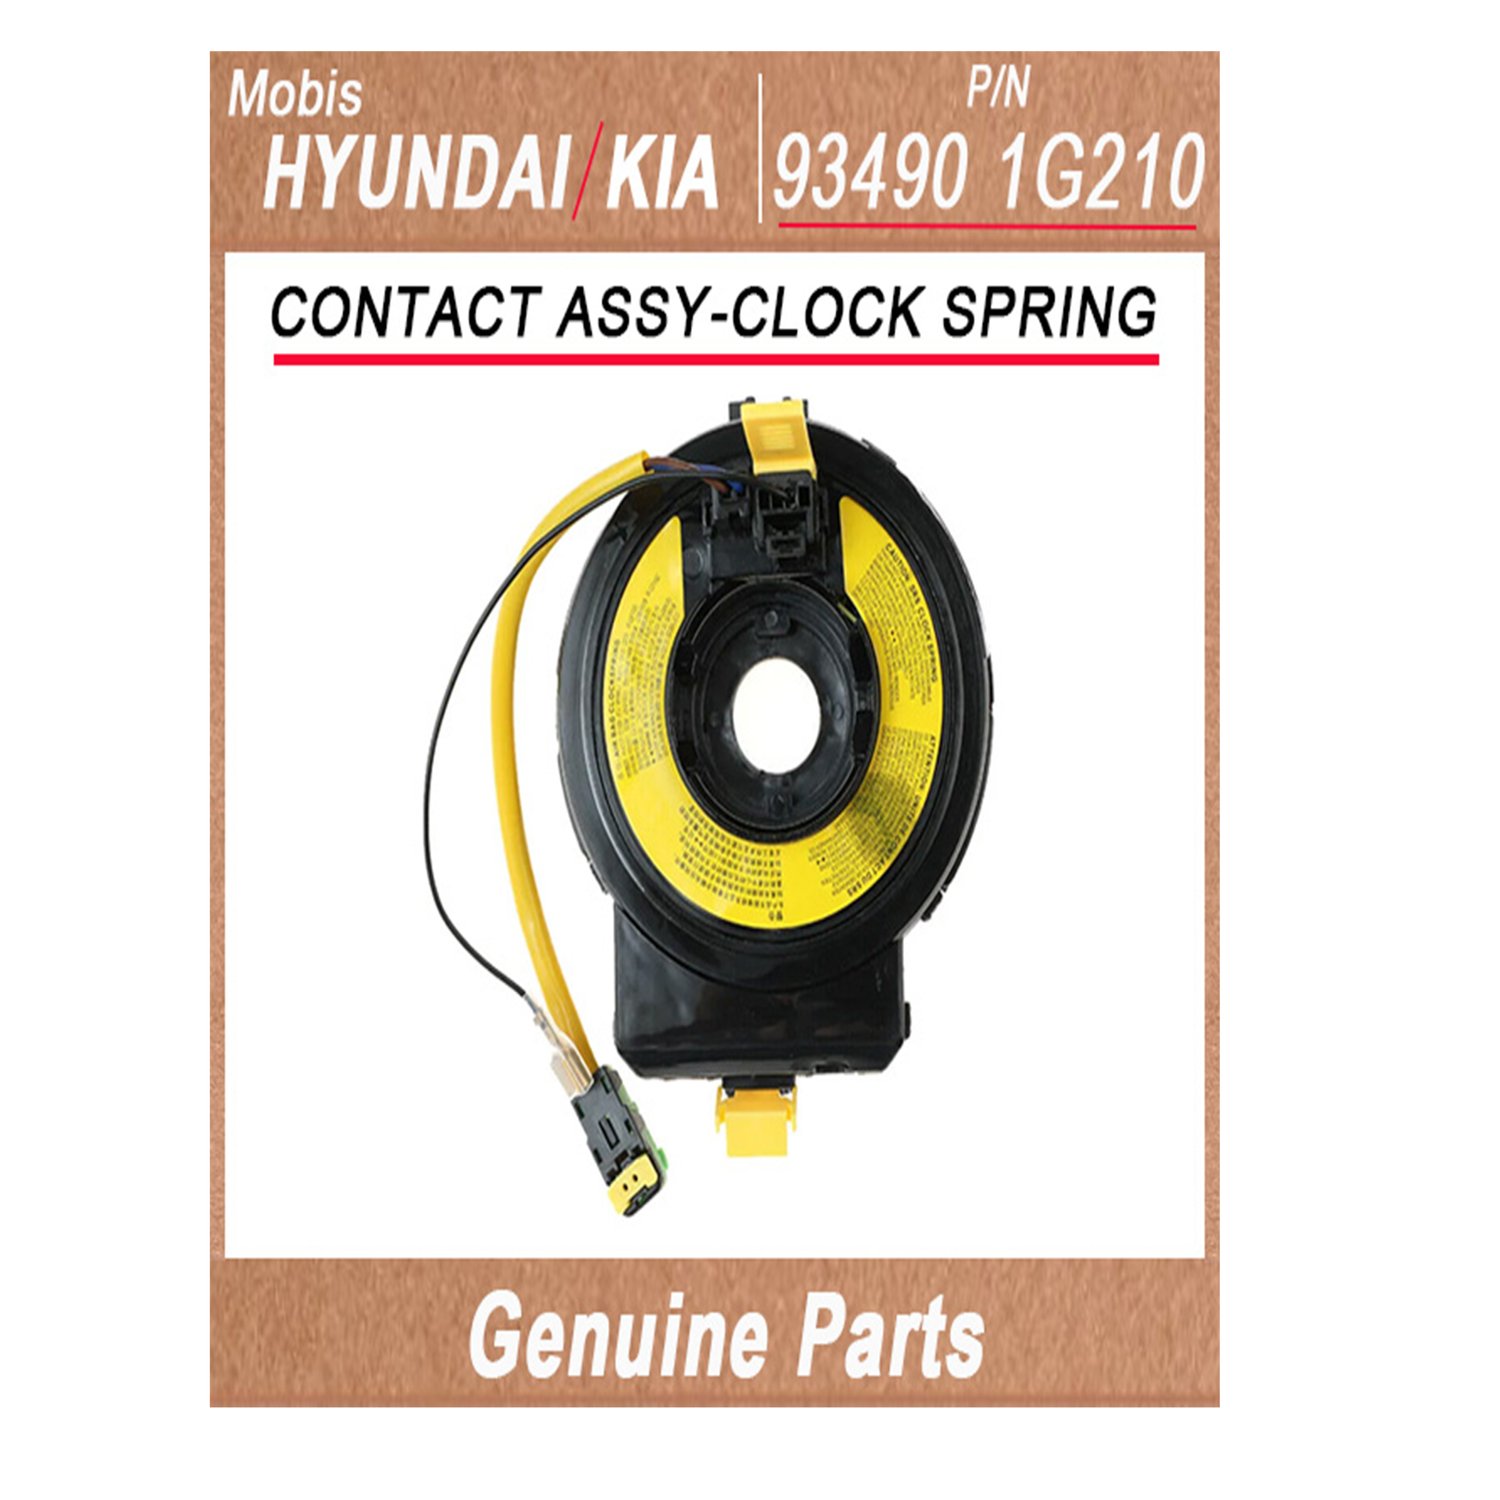 934901G210 _ Genuine Korean Automotive Spare Parts _ Hyundai Kia _Mobis_